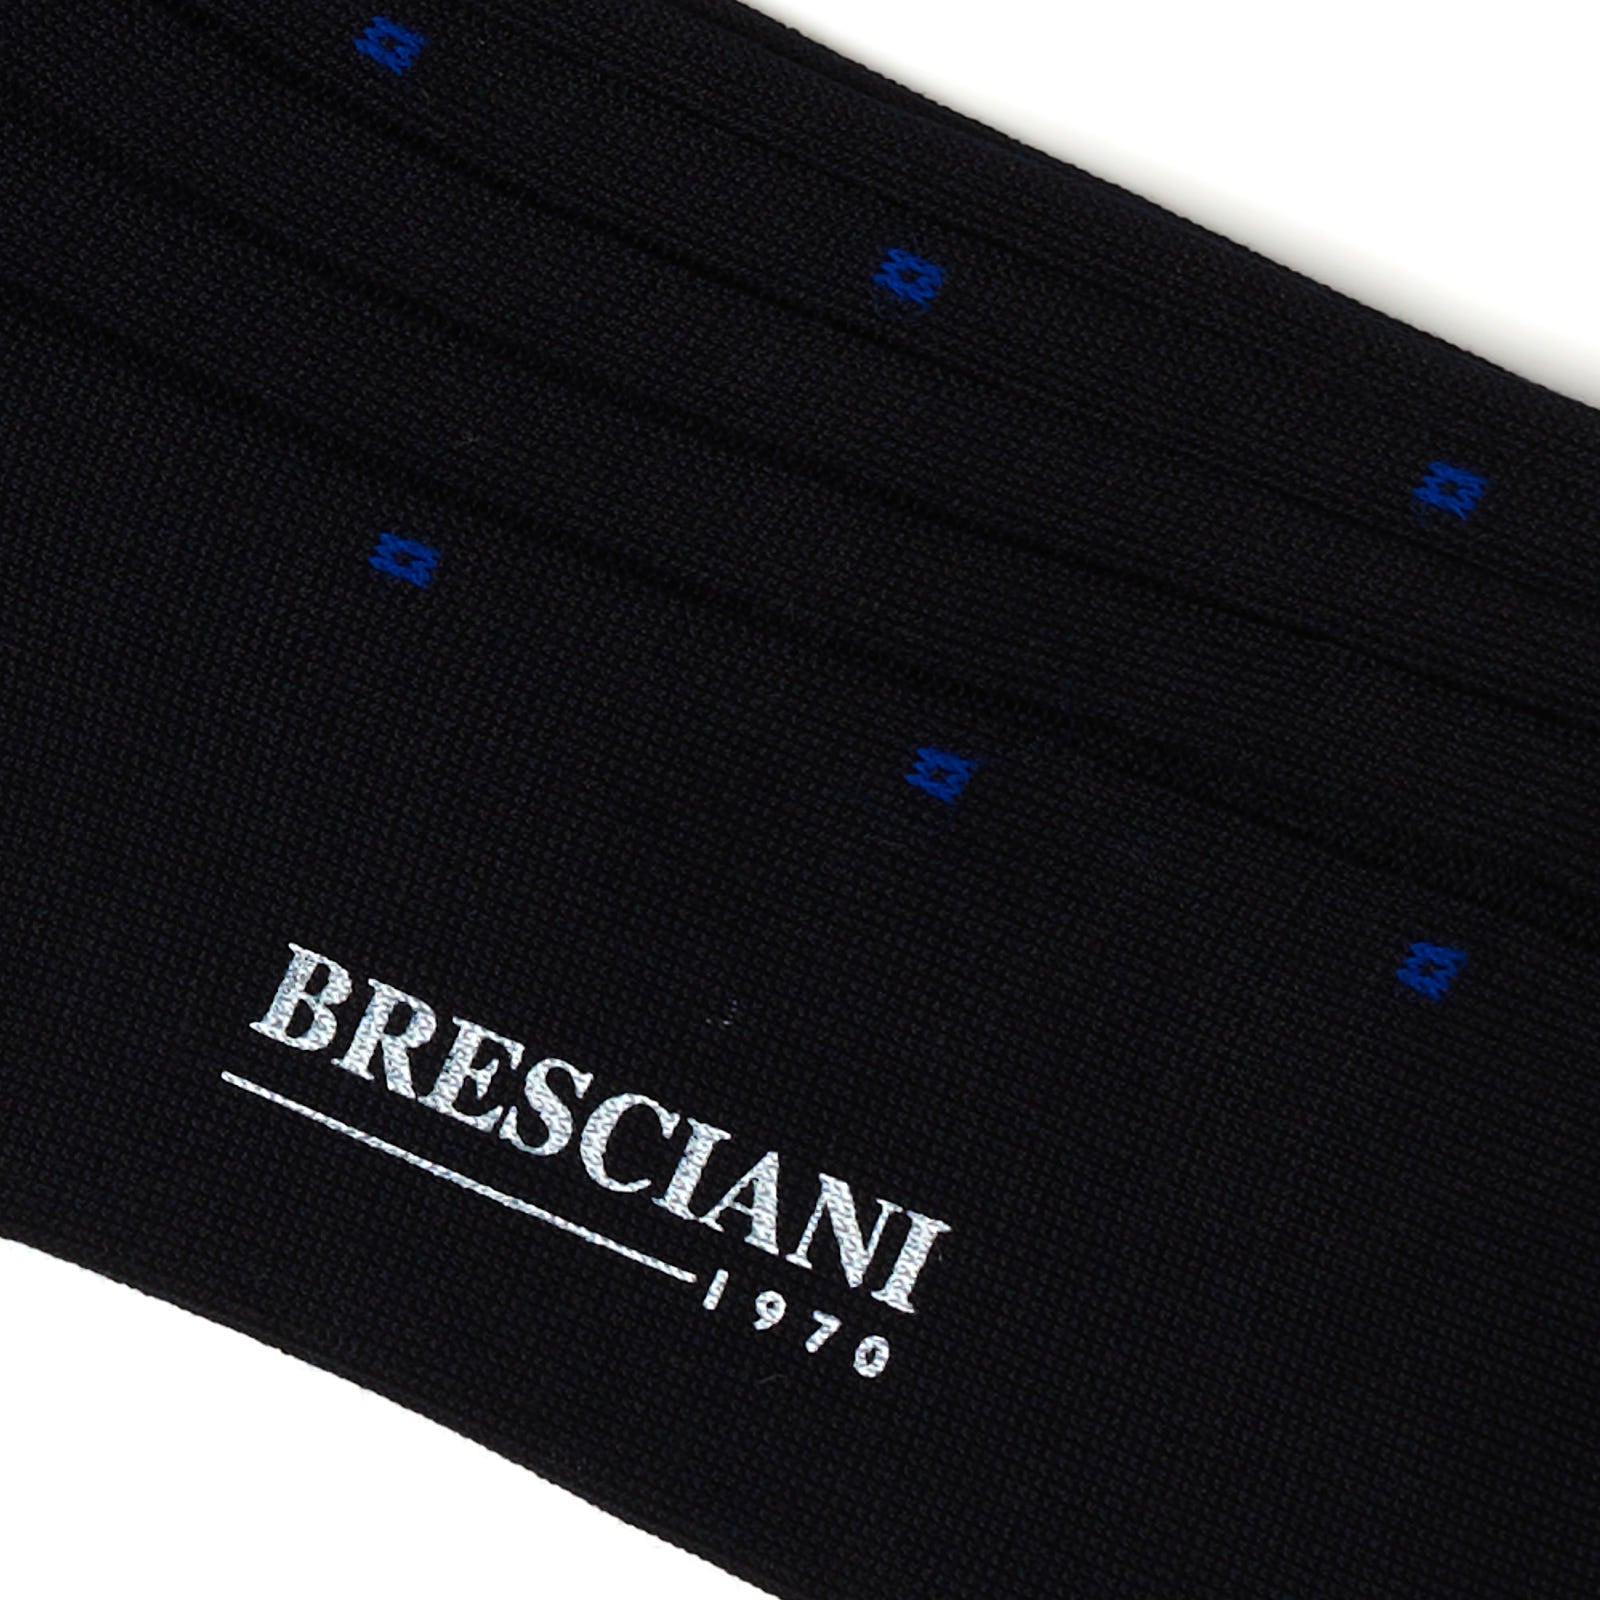 BRESCIANI Cotton Polka Dot Design Mid Calf Length Socks US M-L BRESCIANI